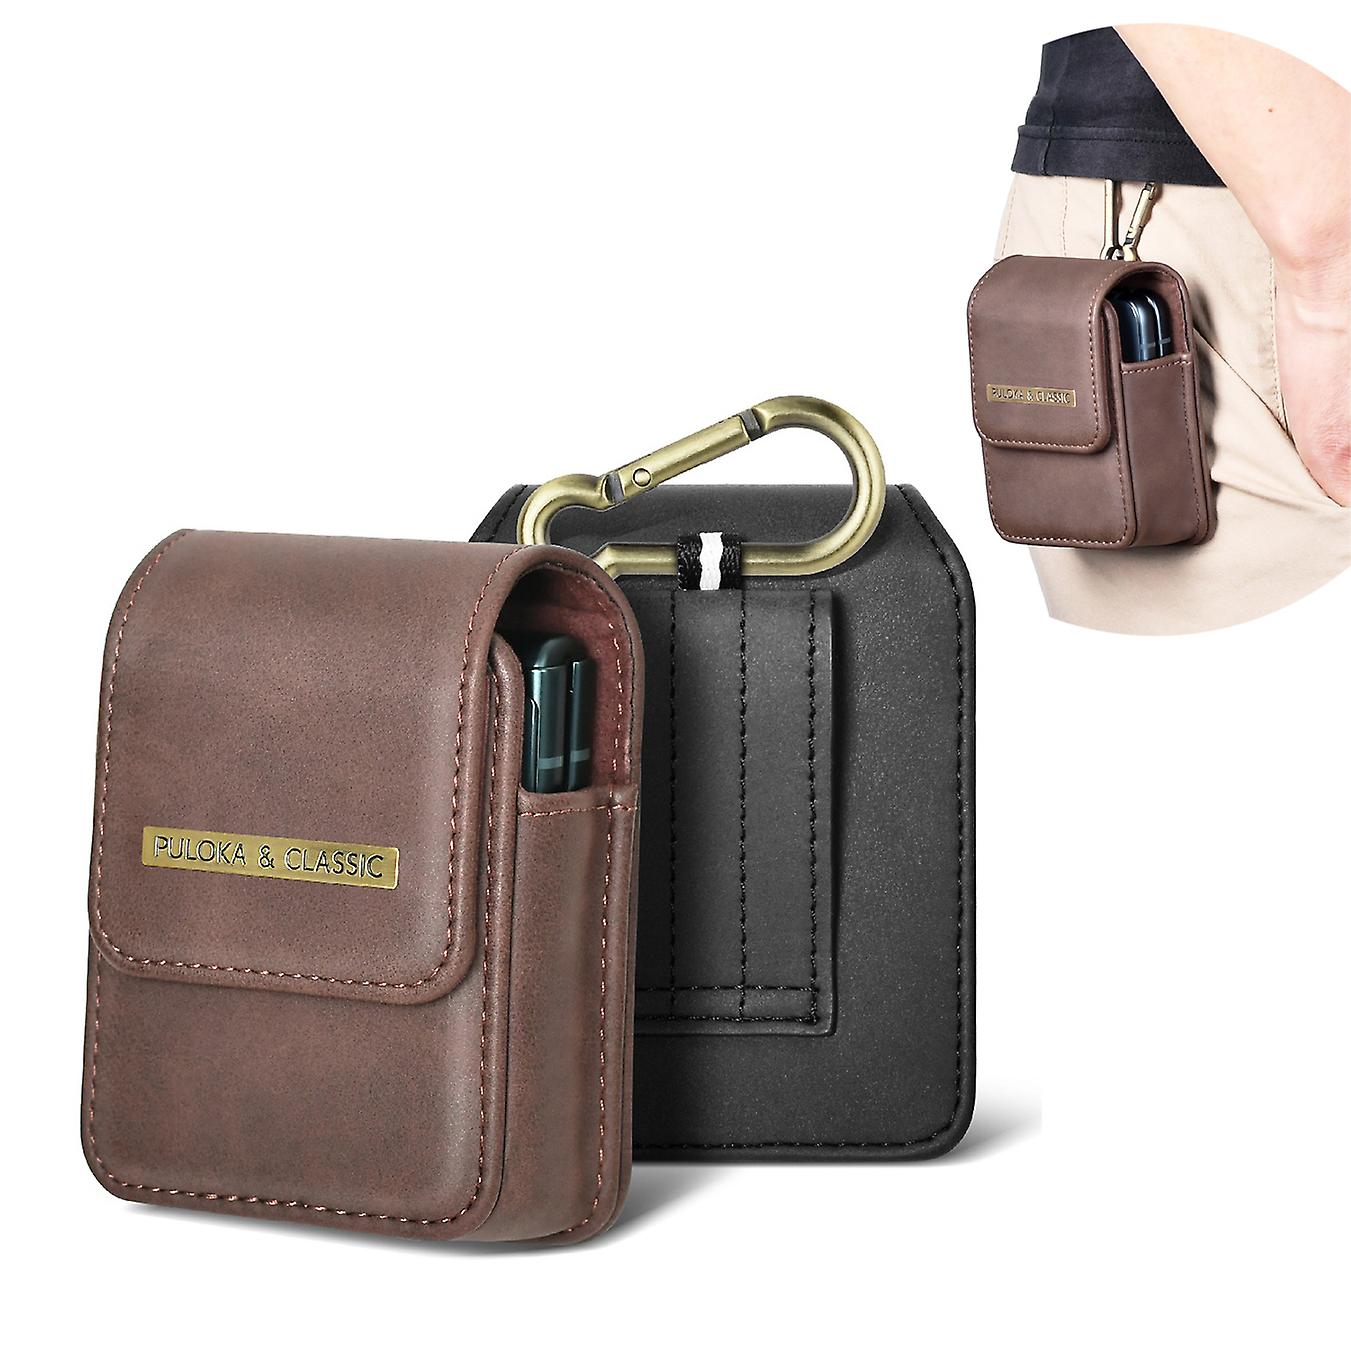 Puloka Portable Waist Bag For Flip Three store